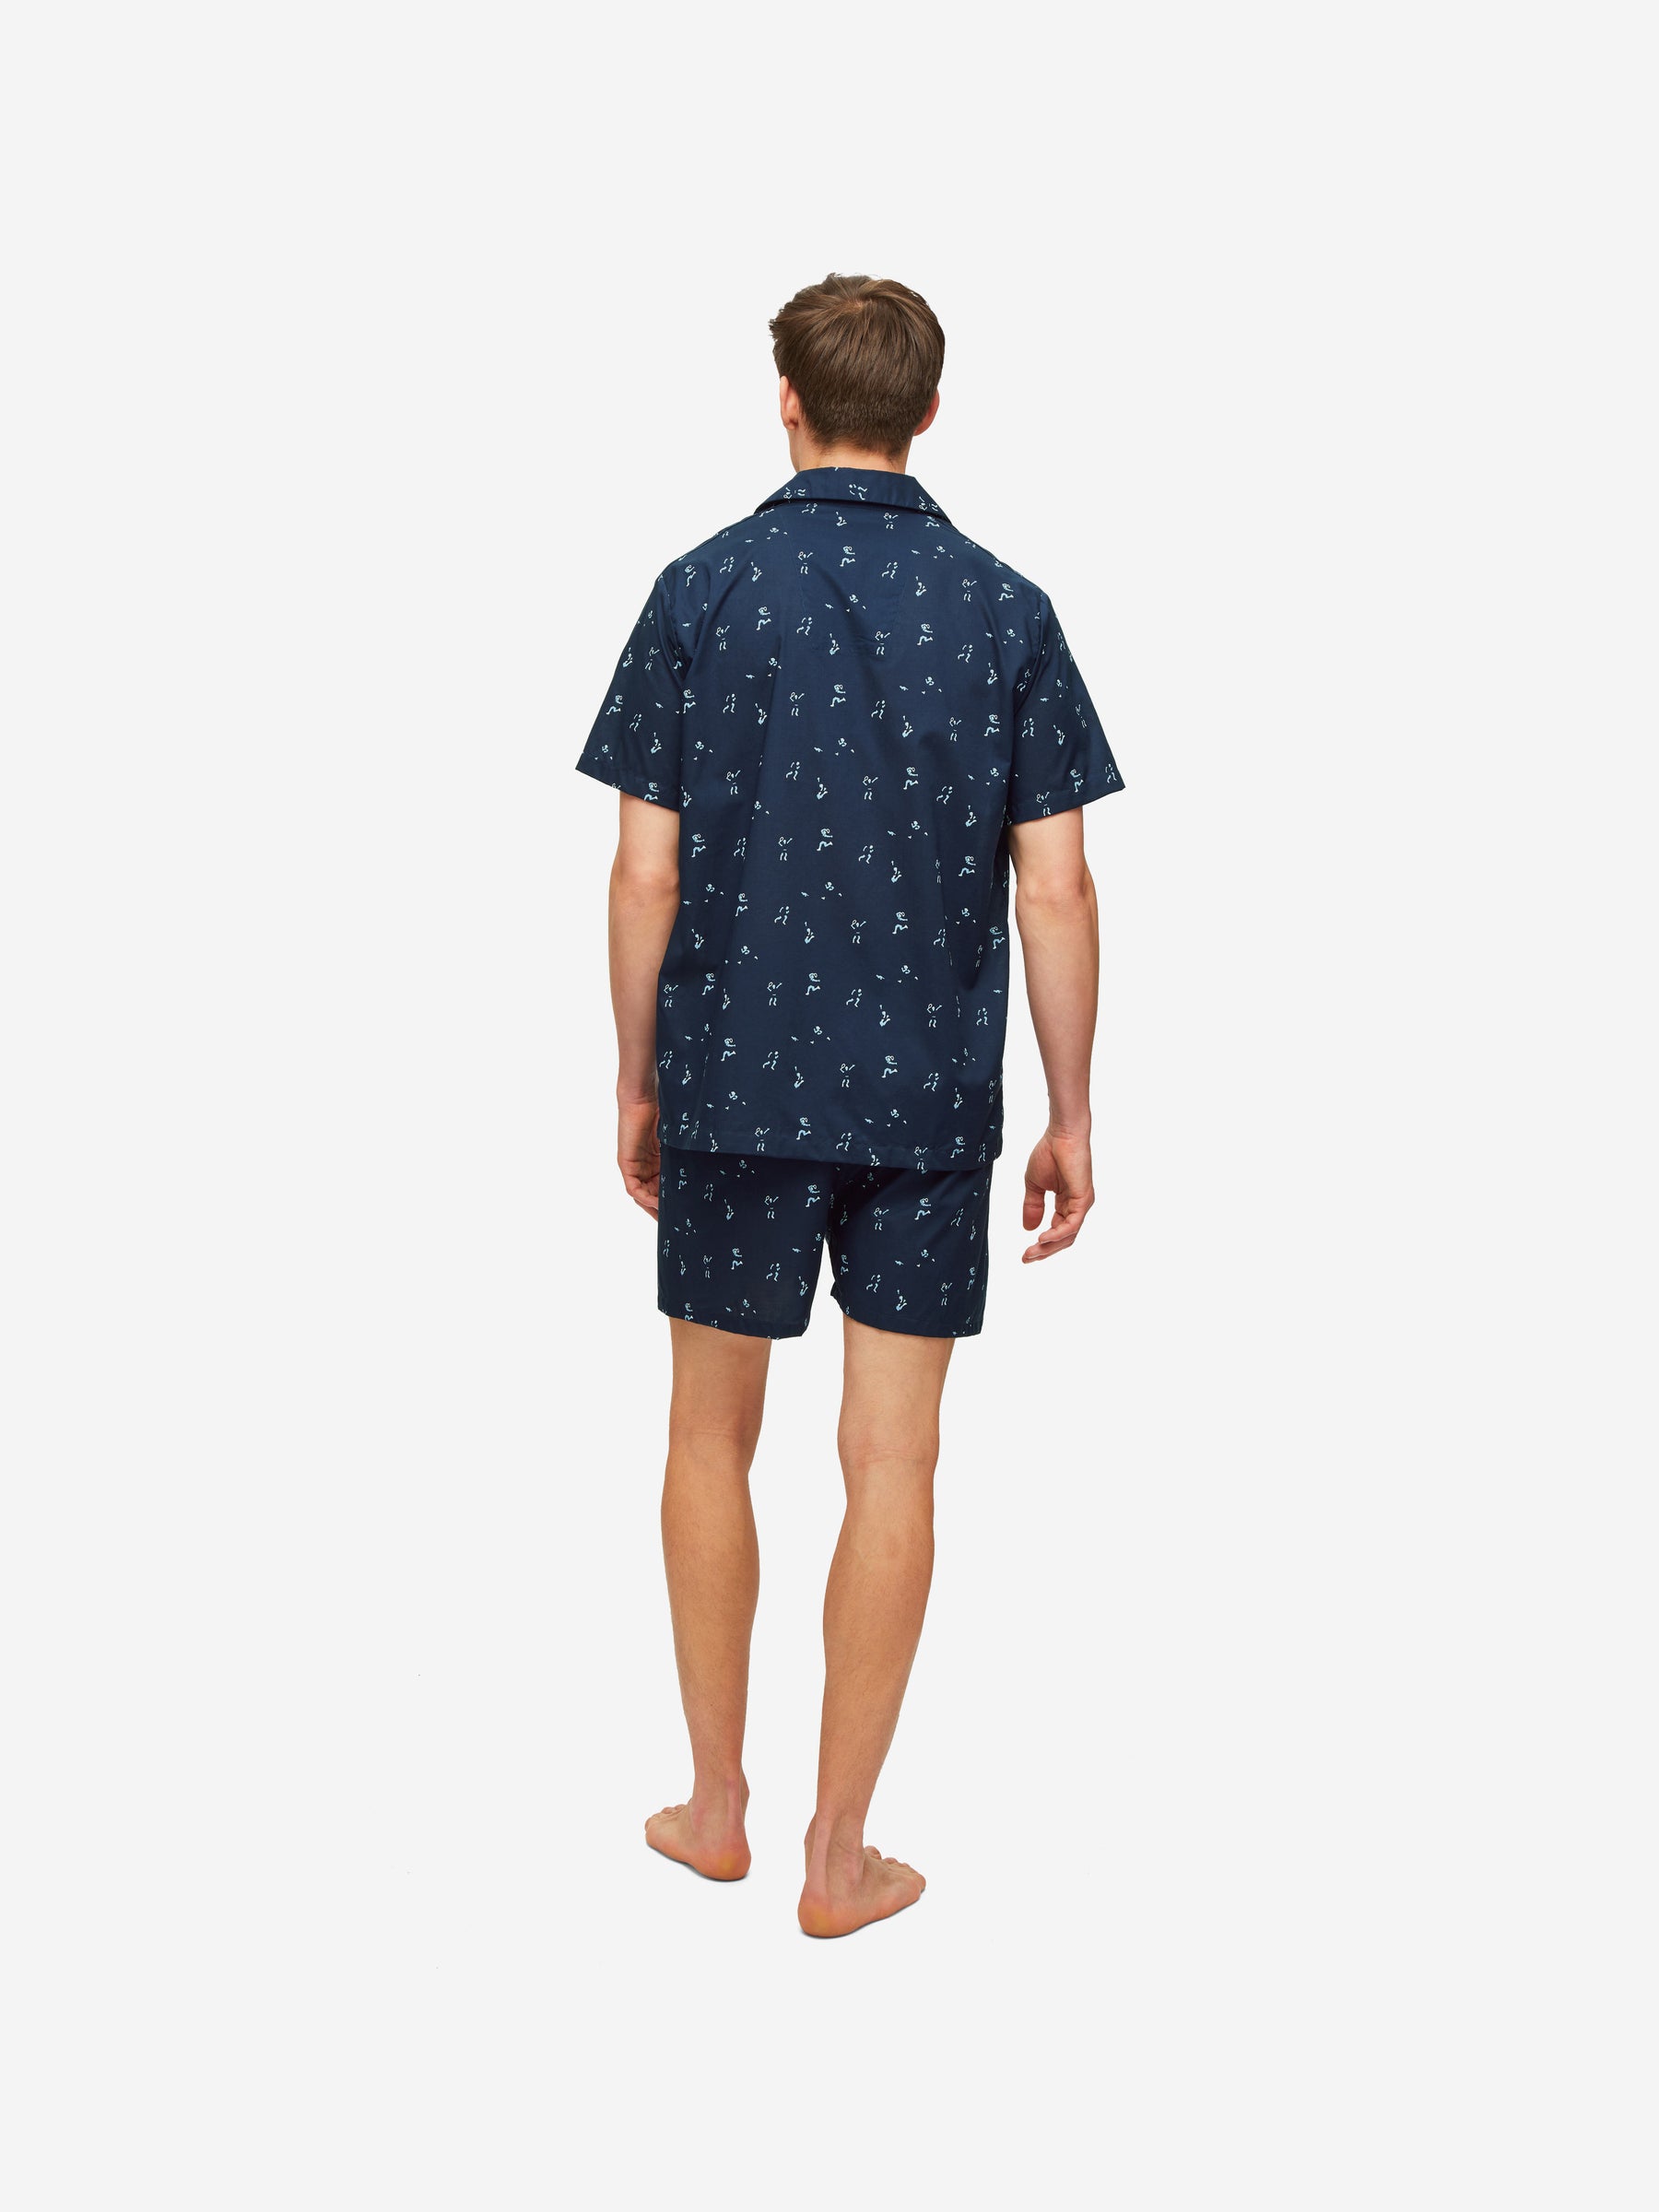 Men's Short Pyjamas Nelson 91 Cotton Batiste Navy